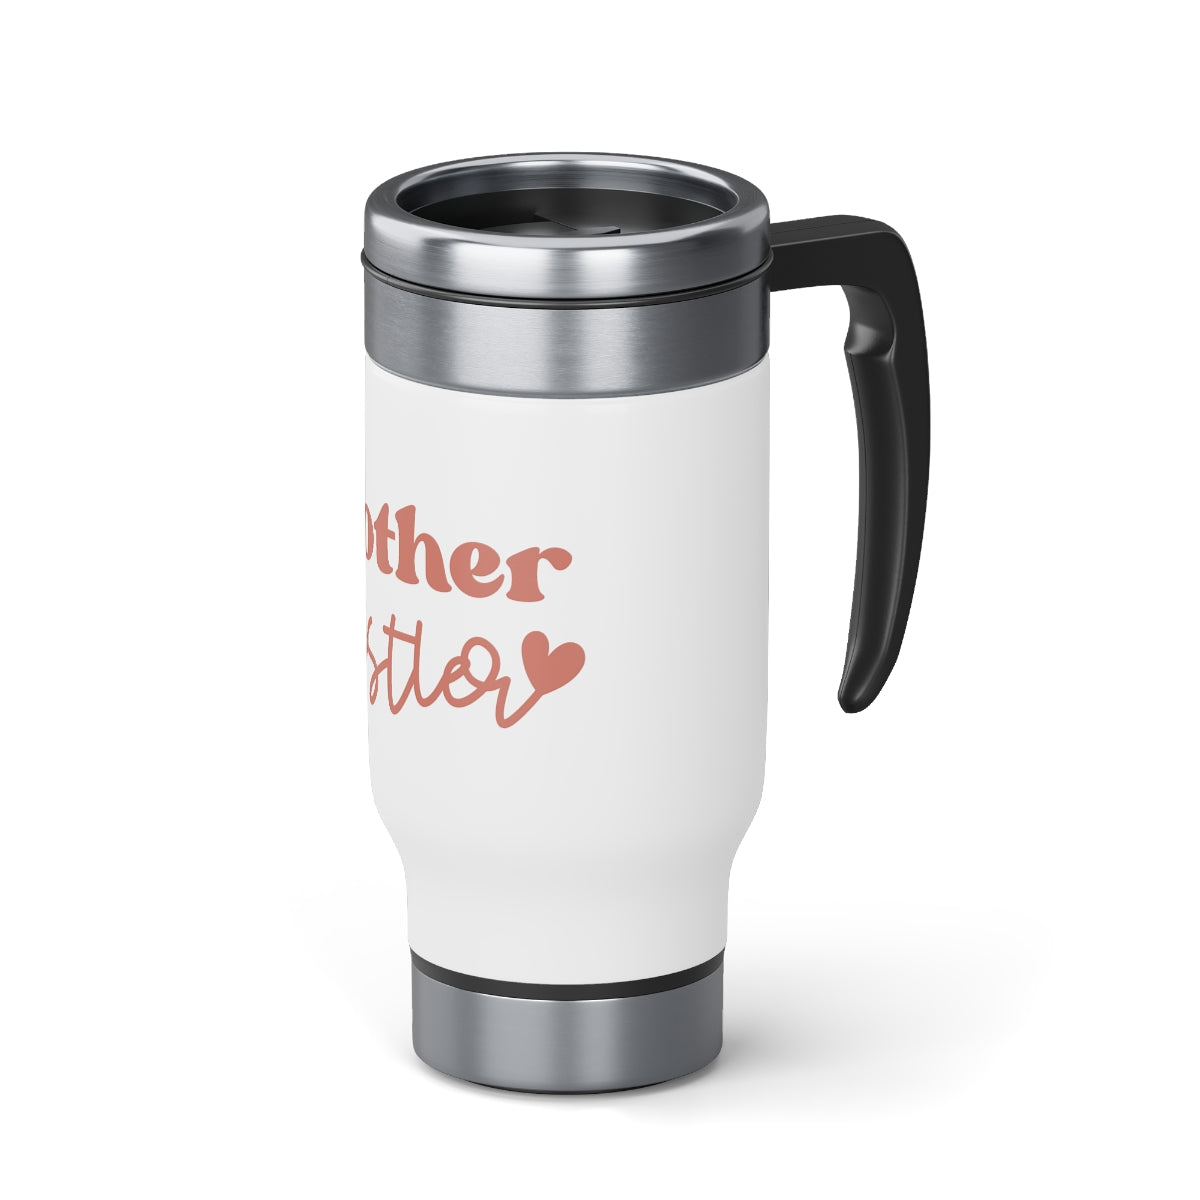 "Mother Hustler" Stainless Steel Travel Mug with Handle, 14oz